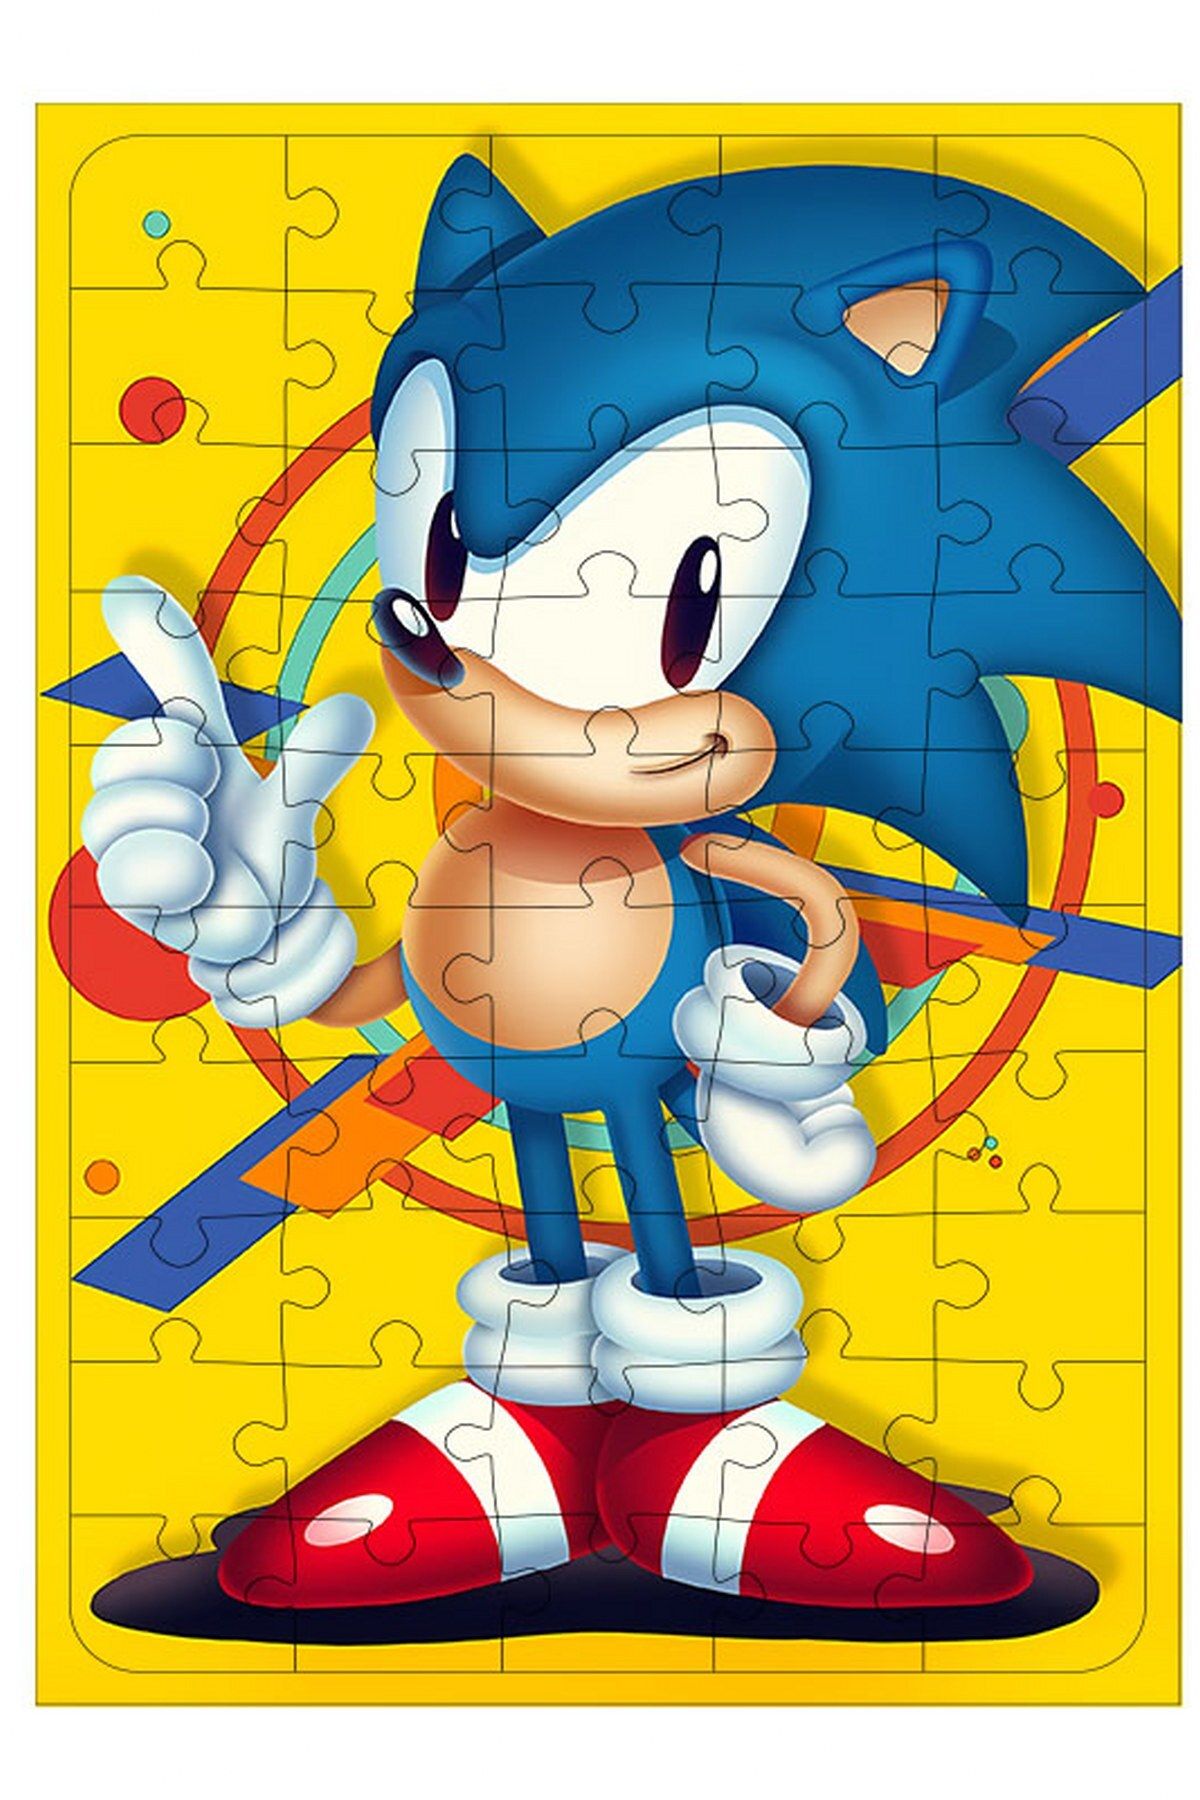 ekart Wooden MDF Puzzle Jigsaw Sonic the Hedgehog 50 Pieces 35*50 cm